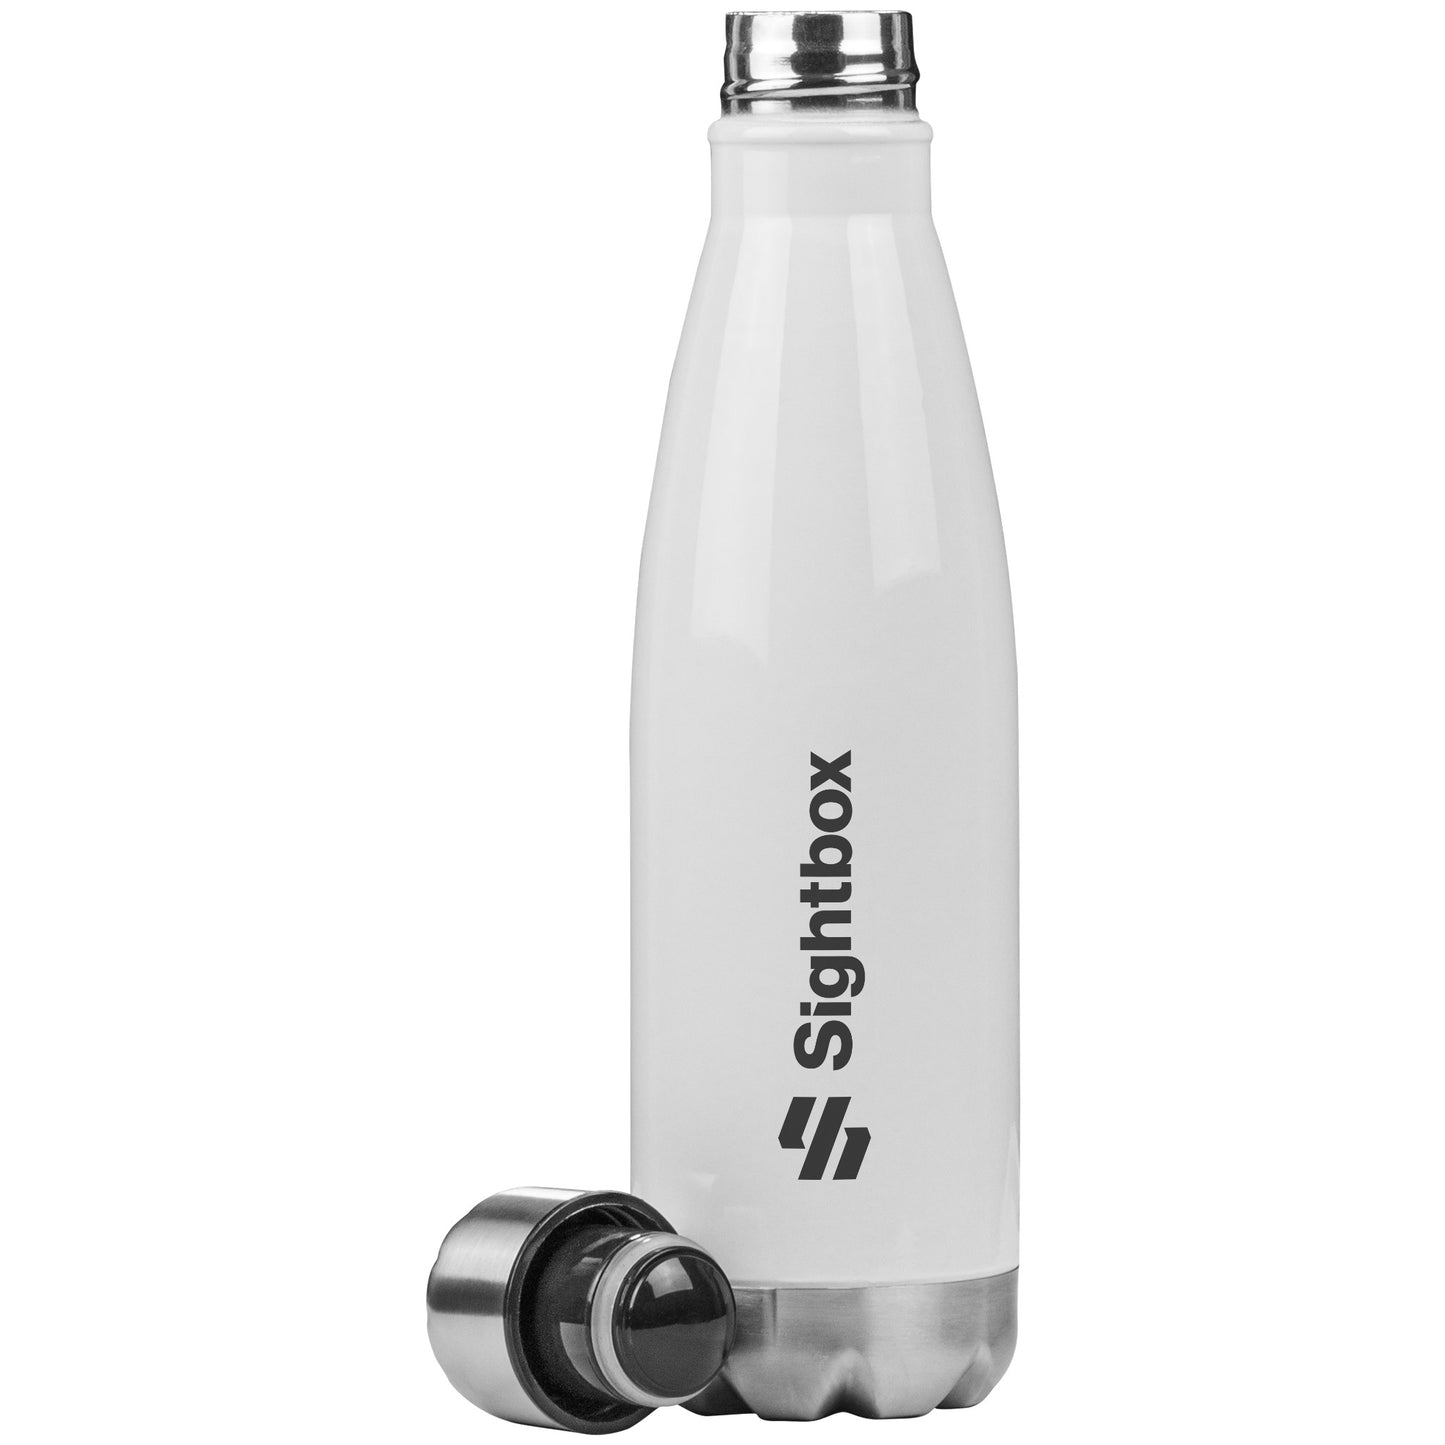 Sightbox Water Bottle